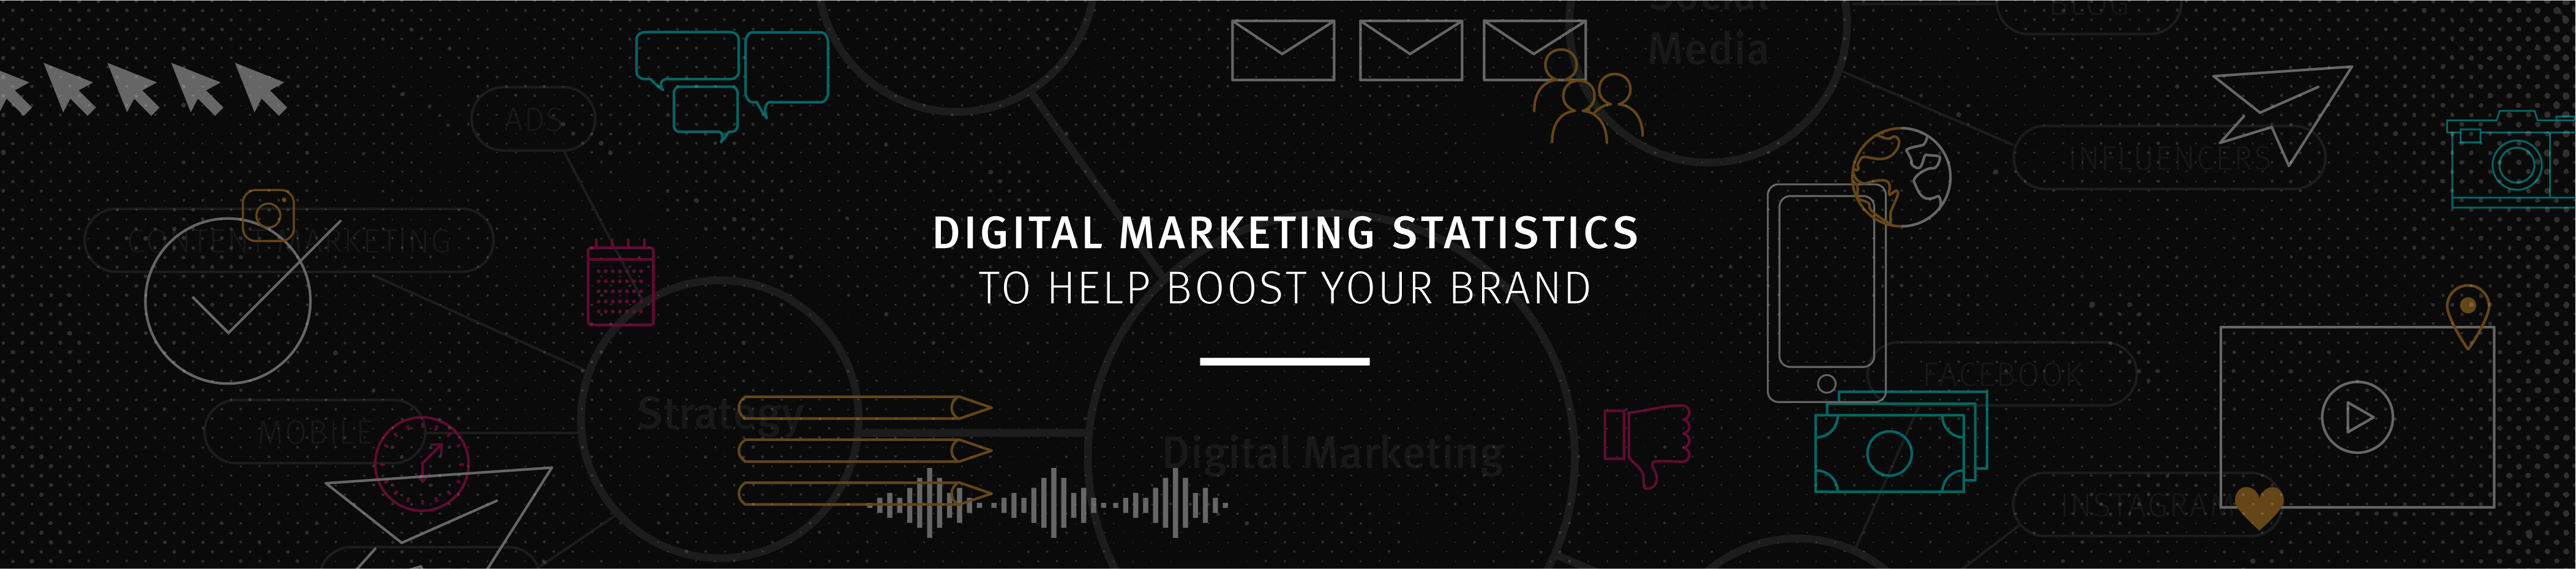 Digital marketing statistics to boost your brand.